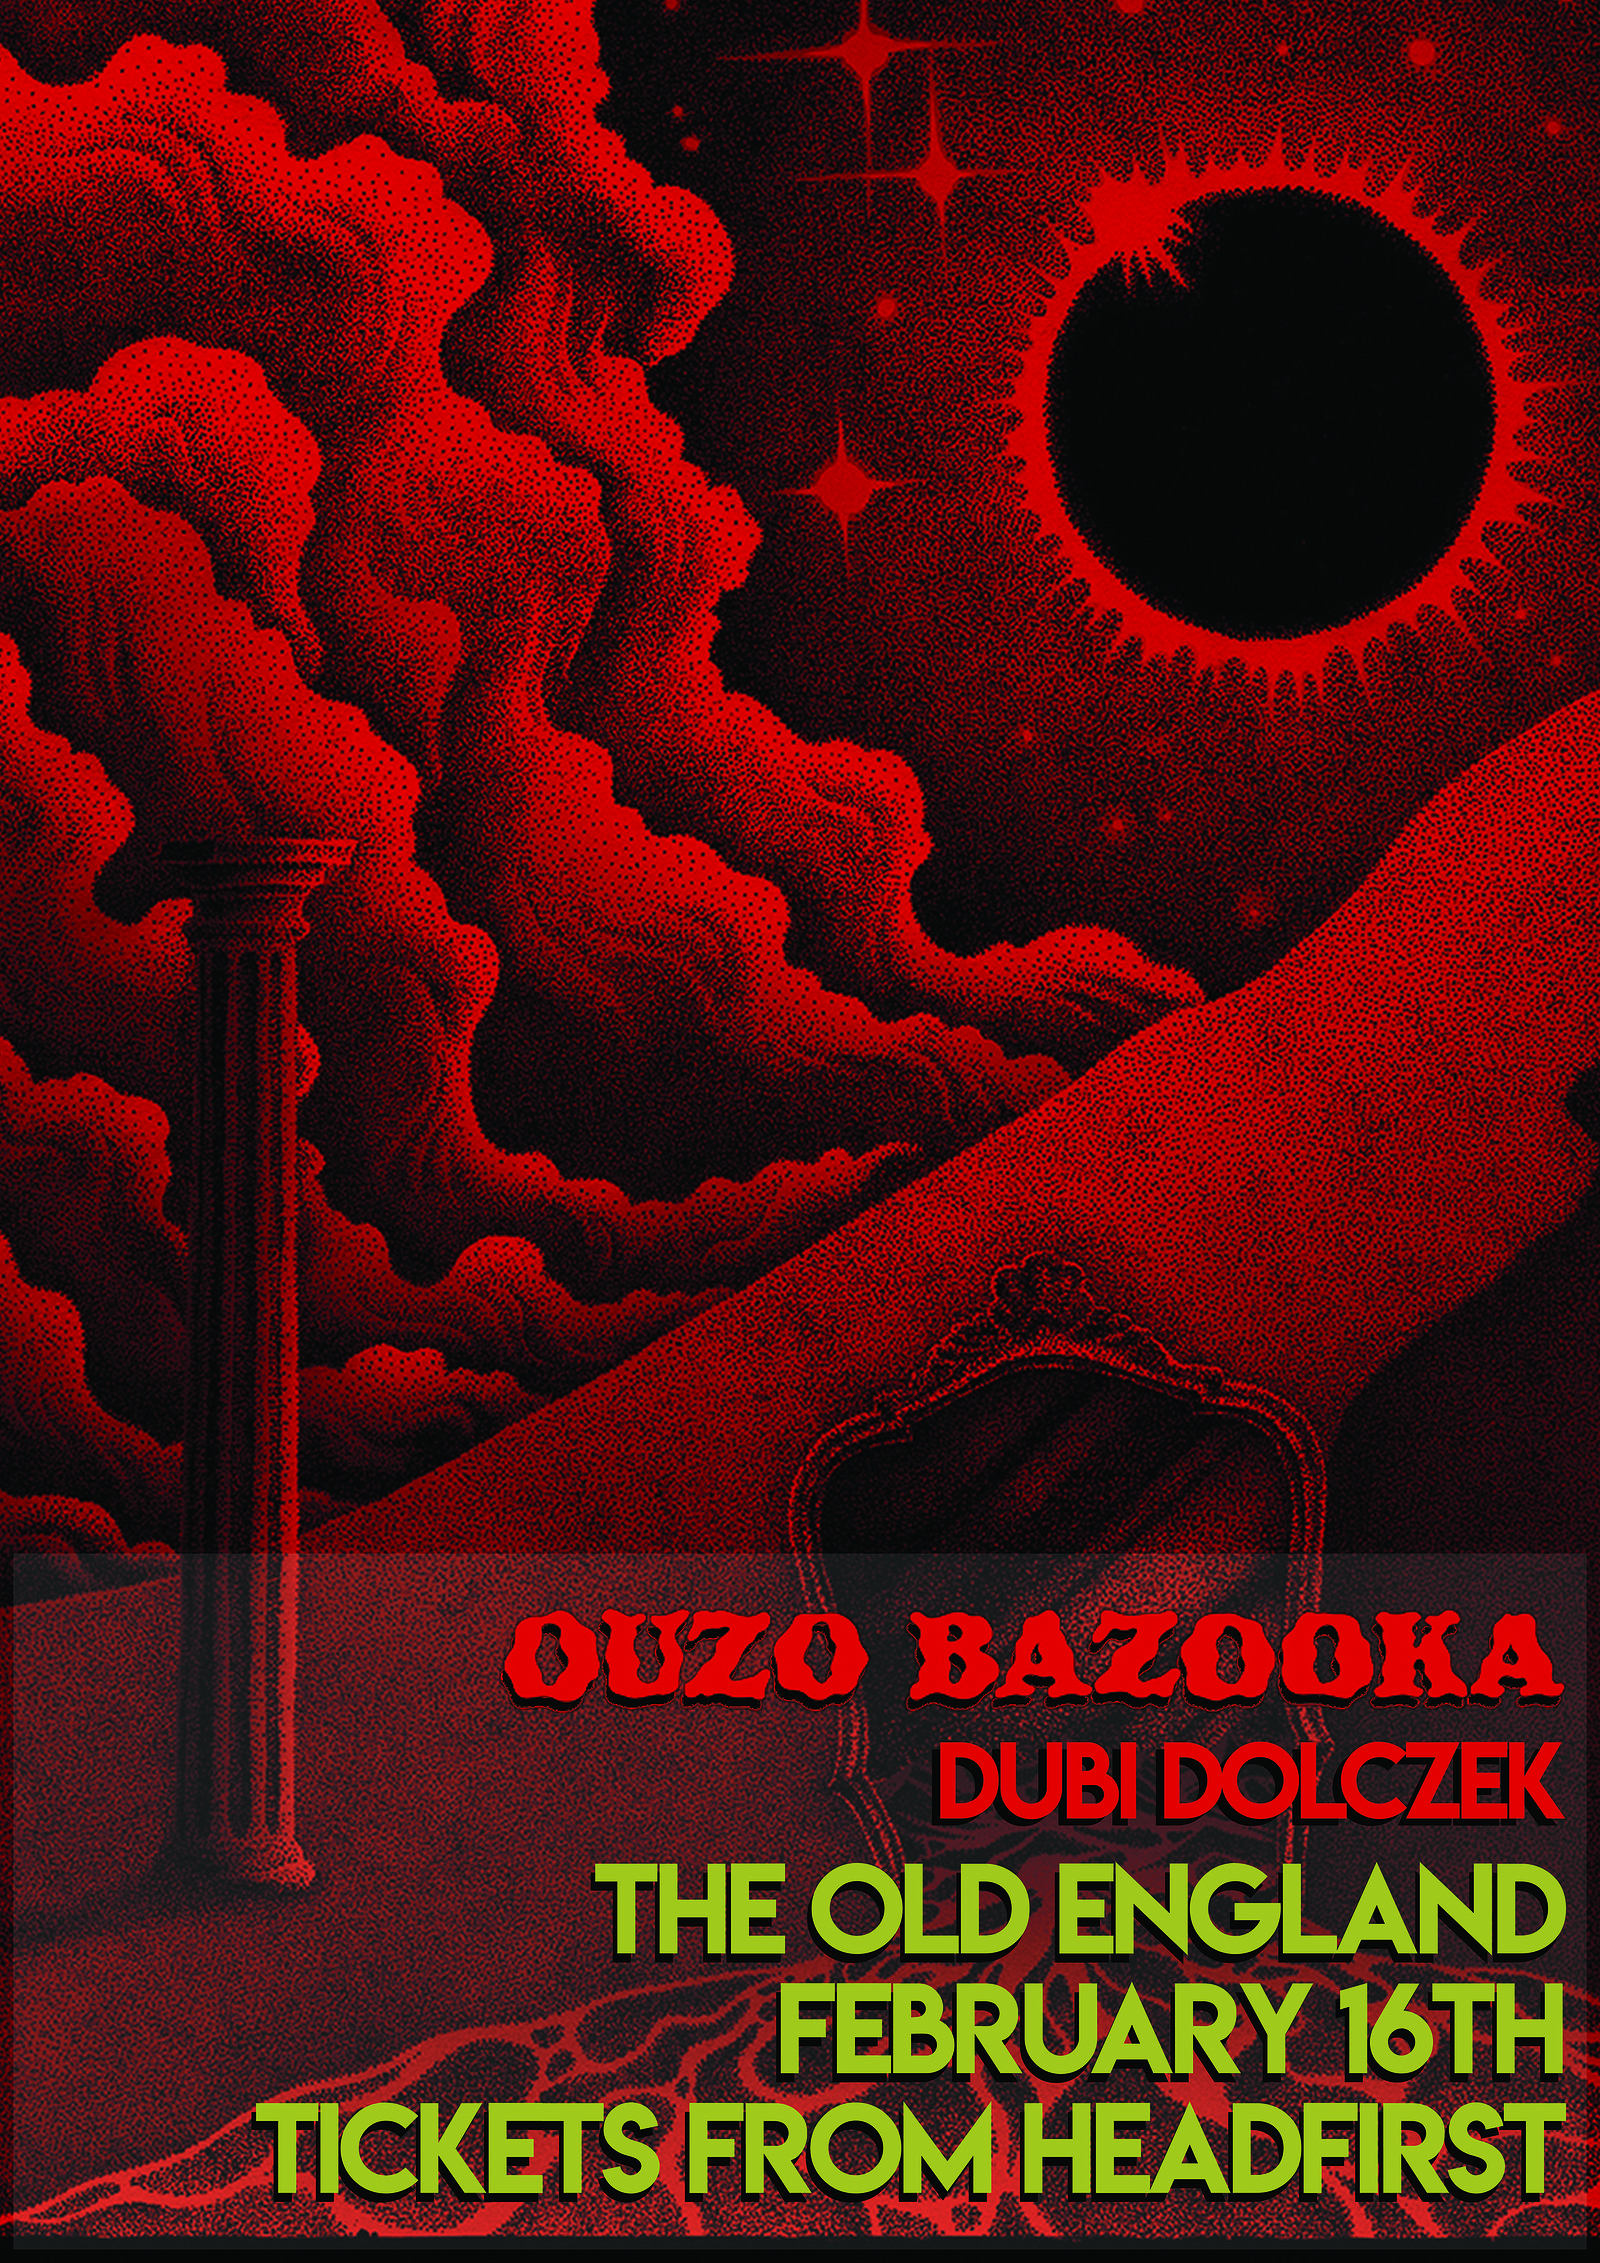 Ouzo Bazooka & Dubi Dolczek at The Old England Pub